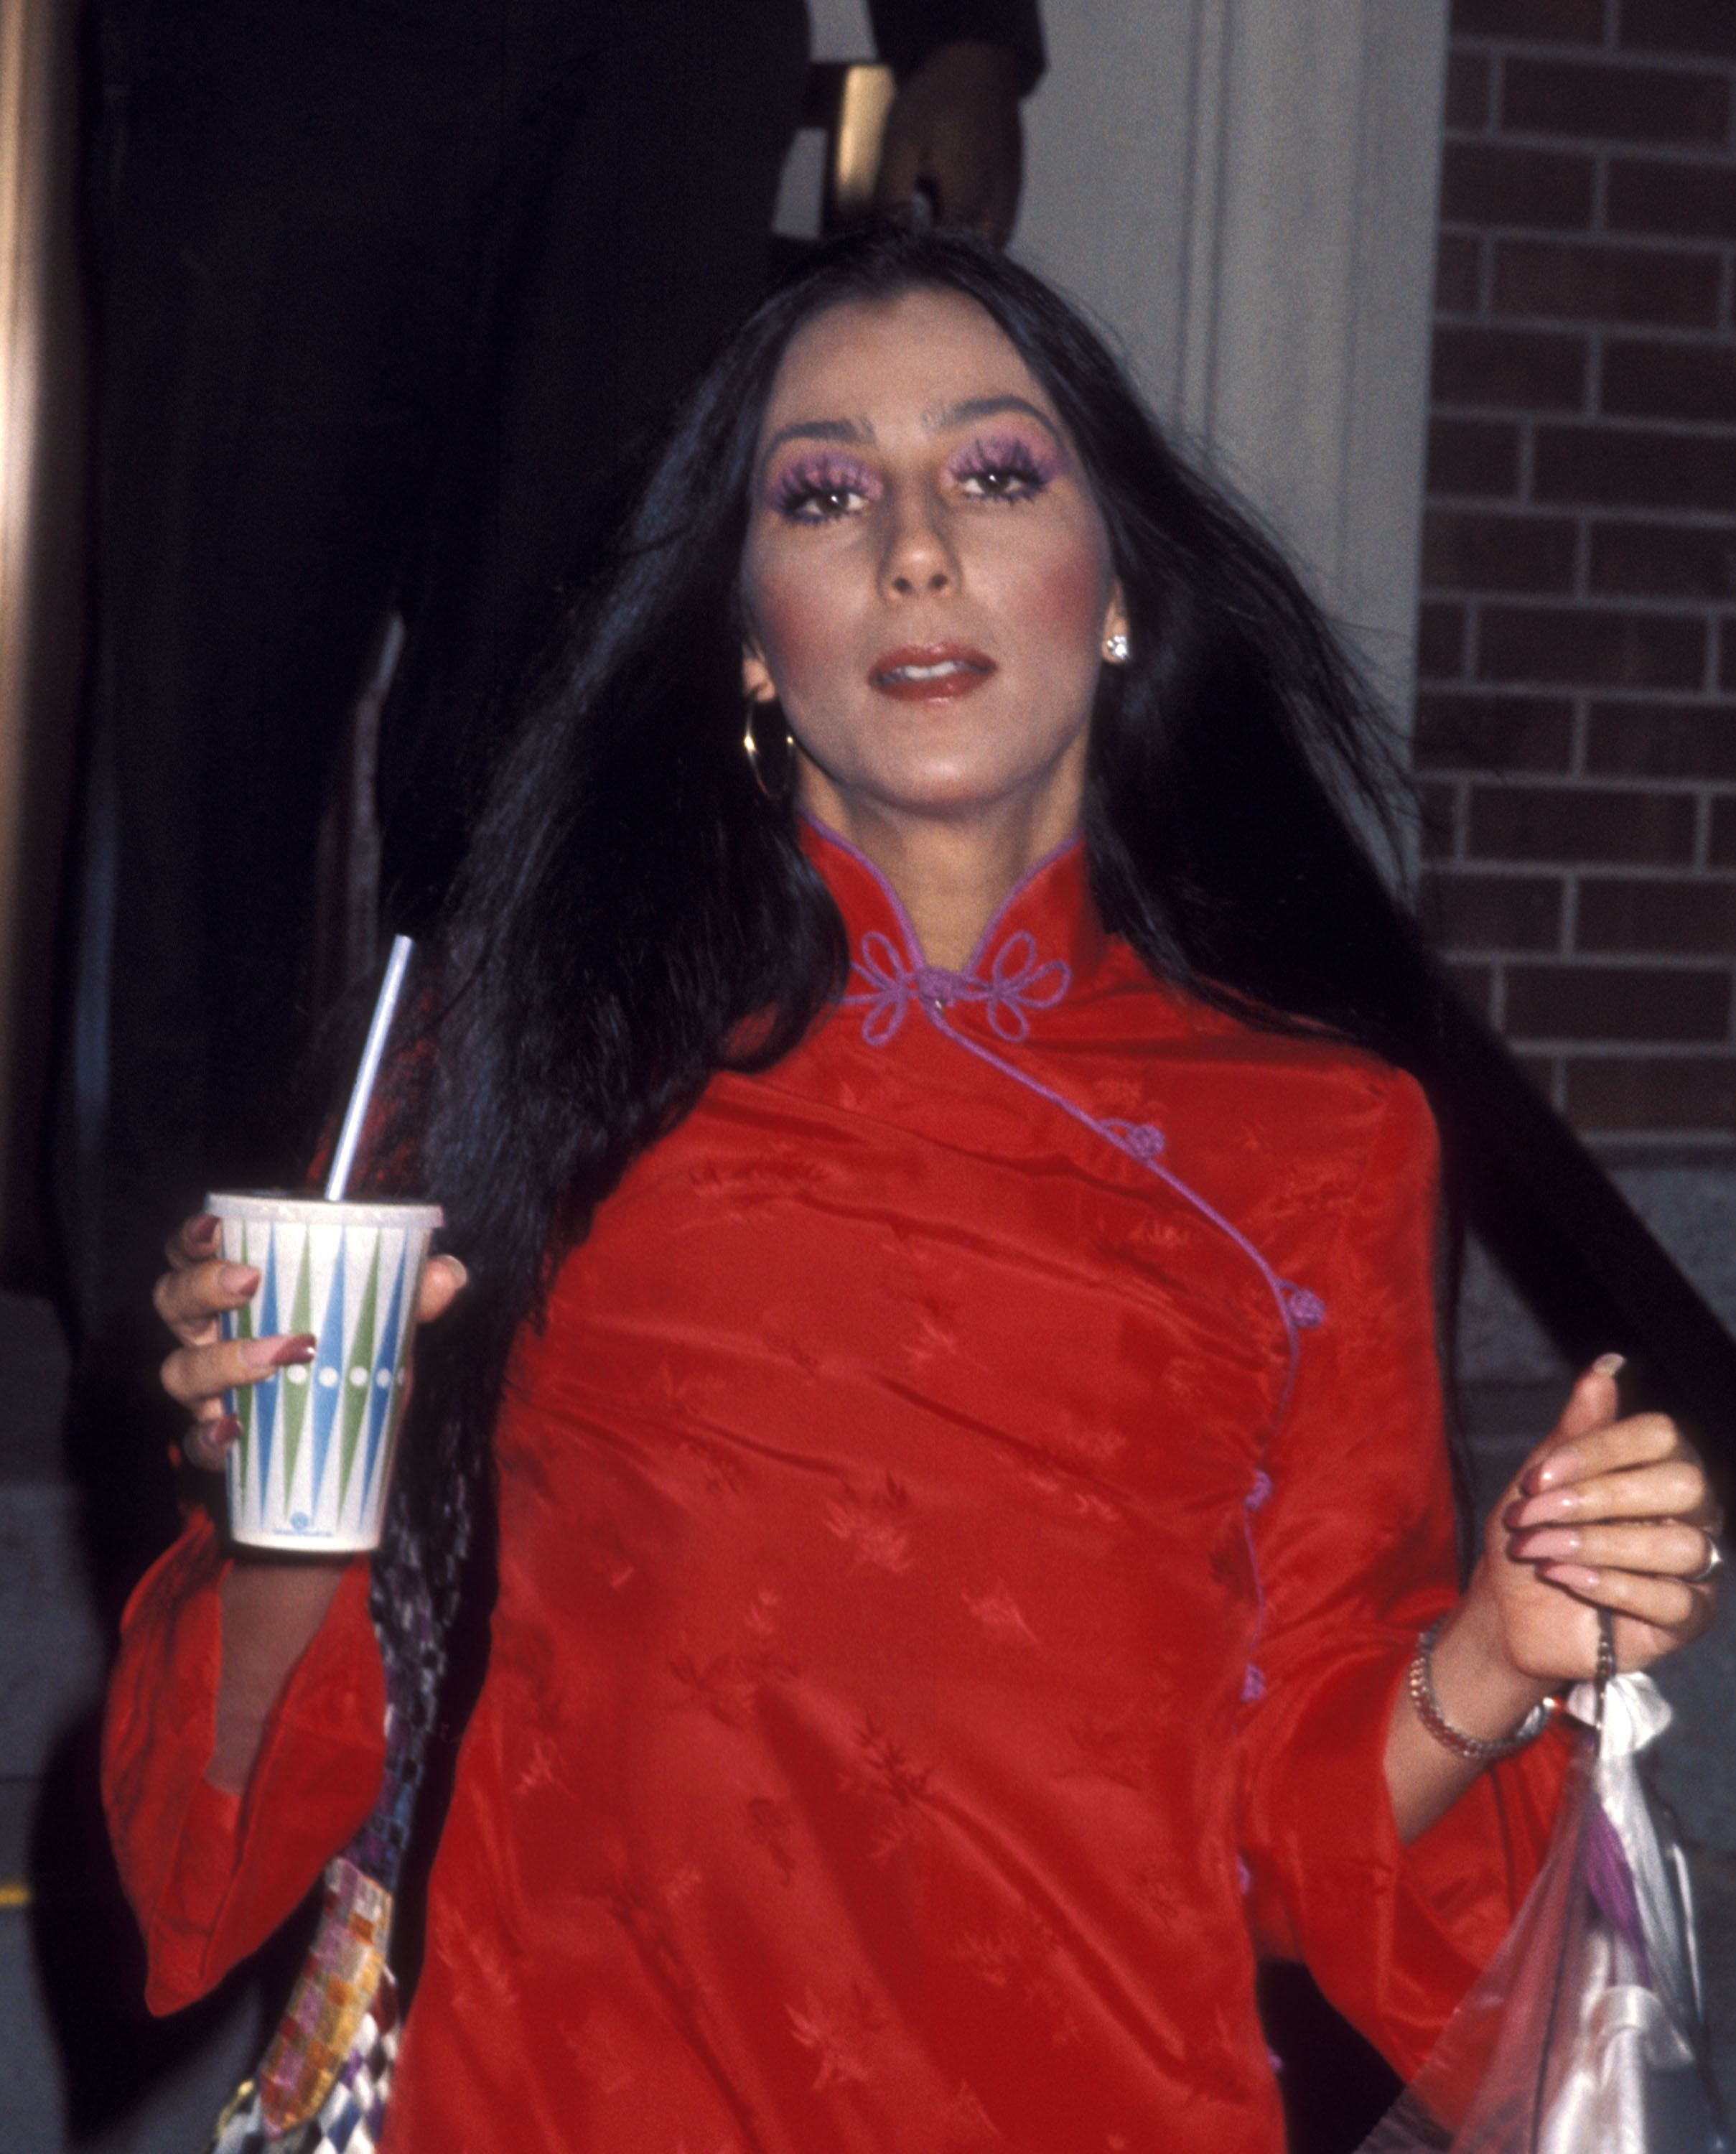 Closeup of Cher